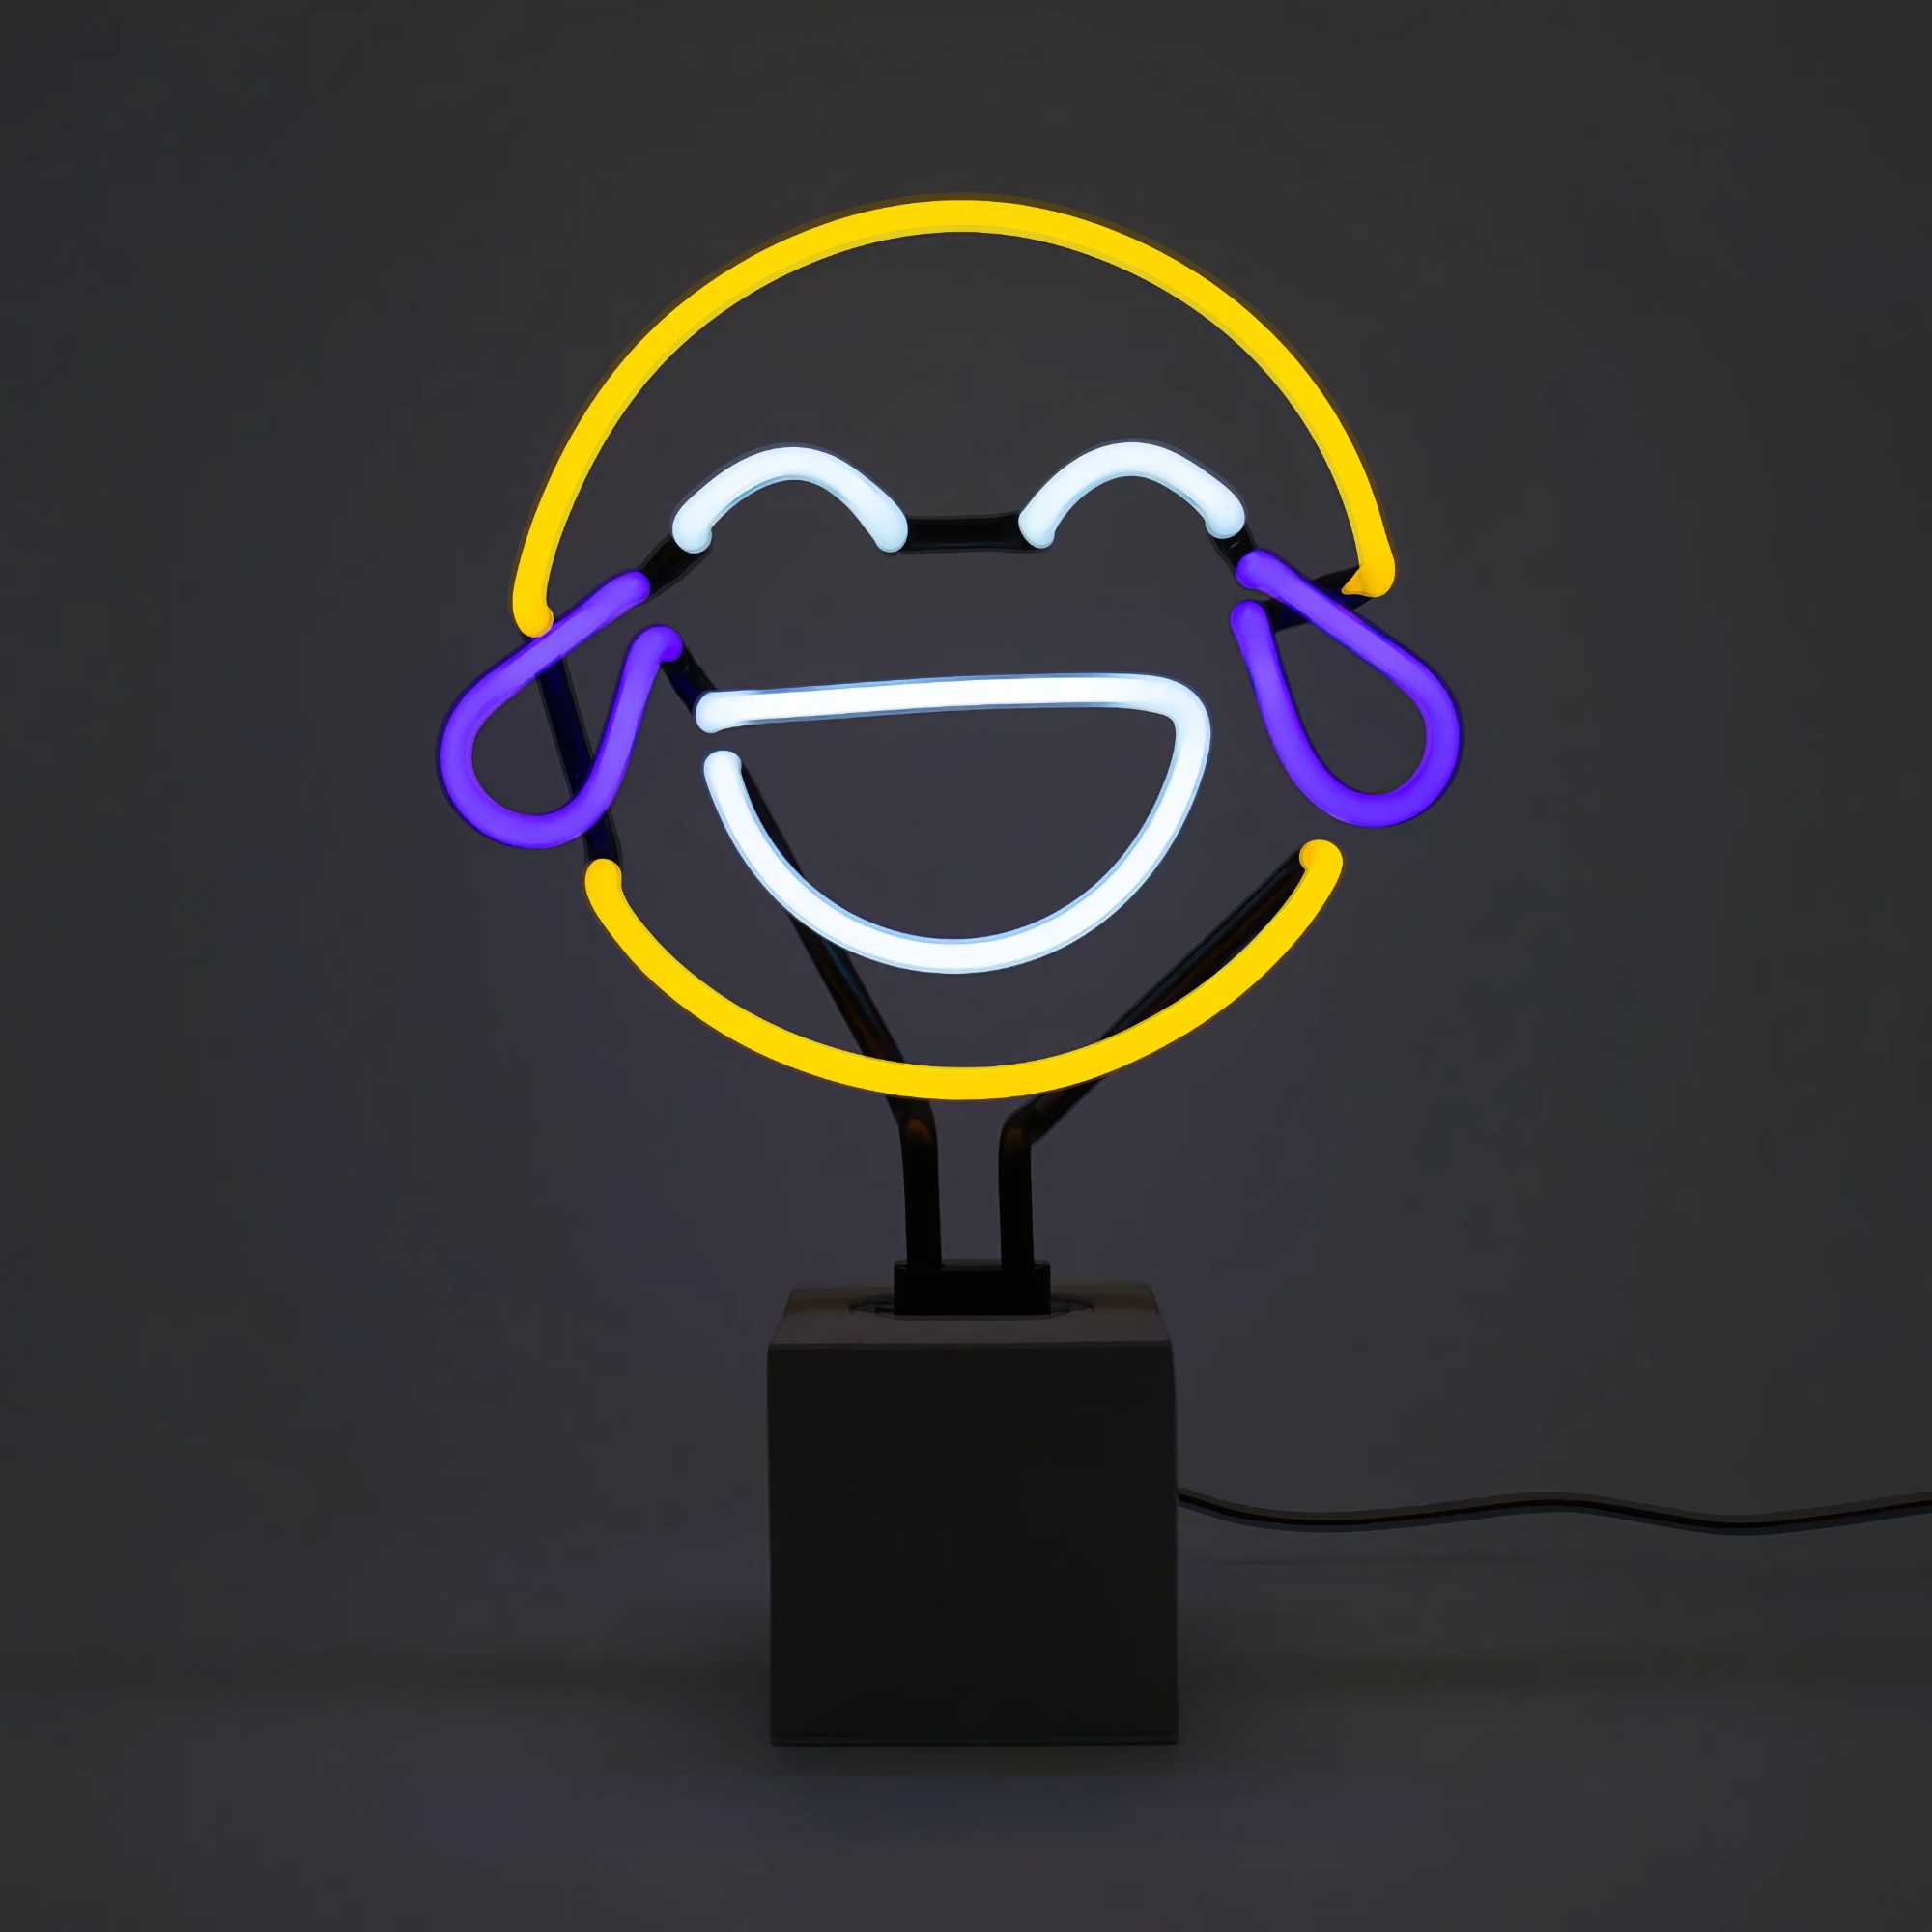 Locomocean Neon Art, laugh emoji